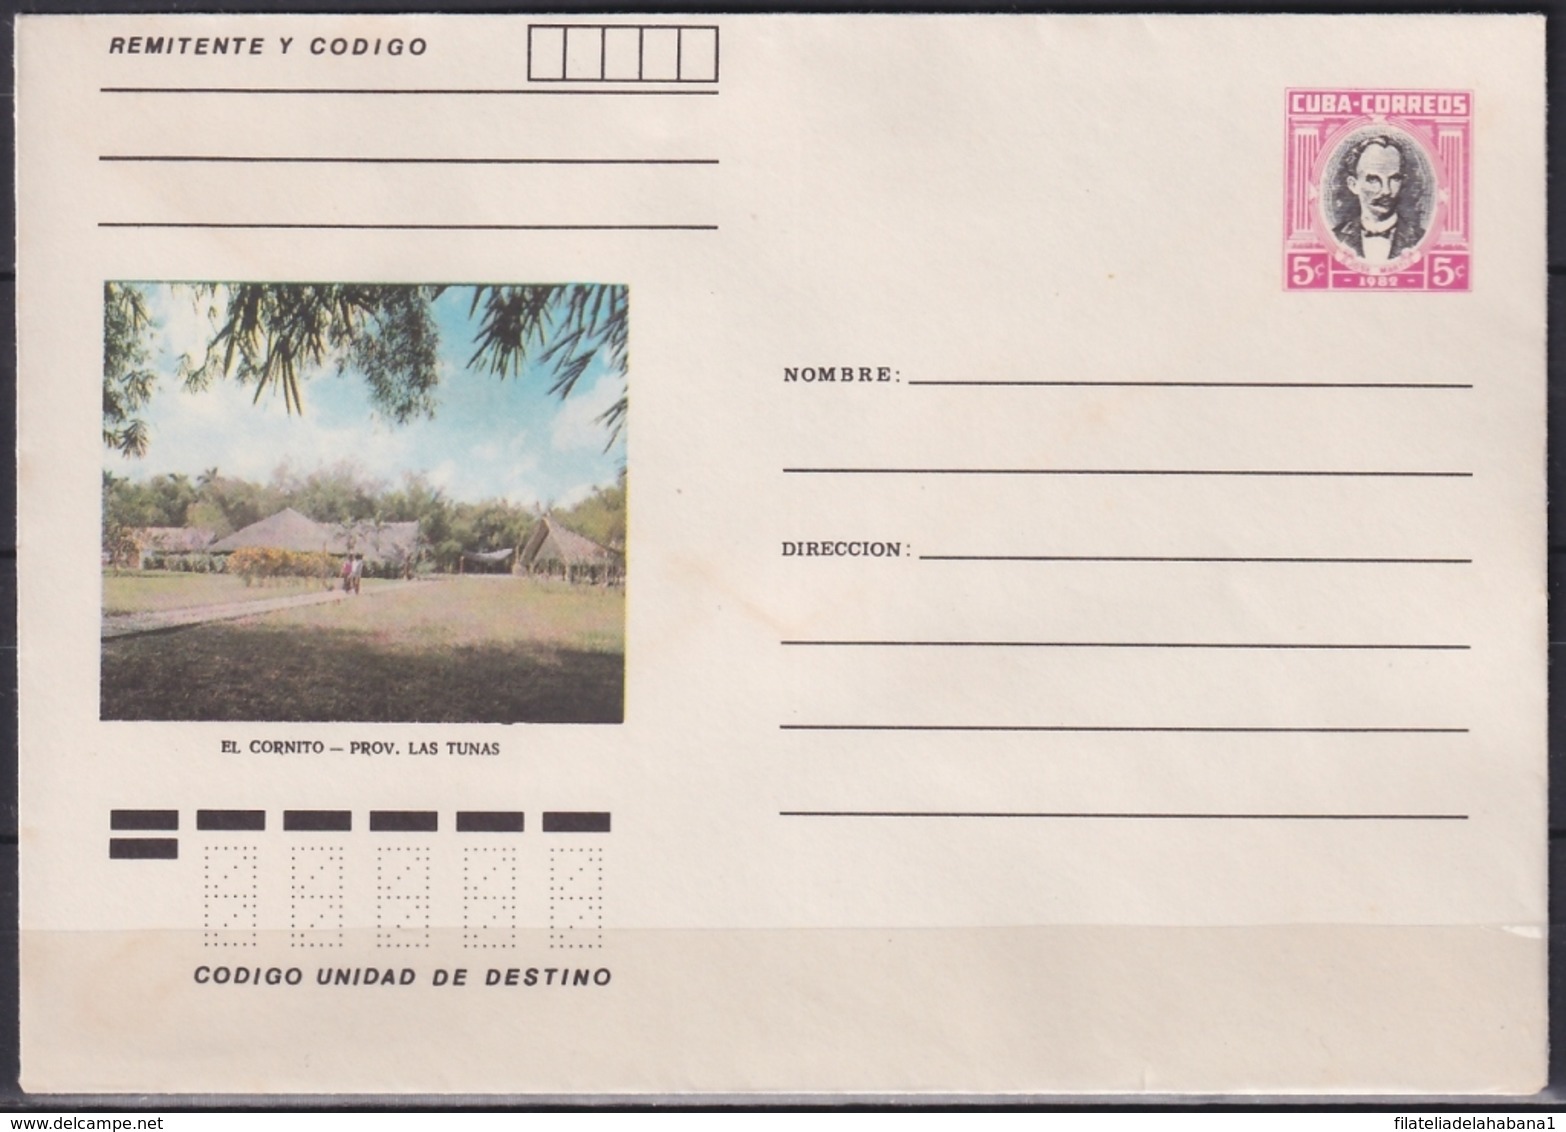 1982-EP-202 CUBA 1982 5c POSTAL STATIONERY COVER. LAS TUNAS, EL CORNITO. - Lettres & Documents